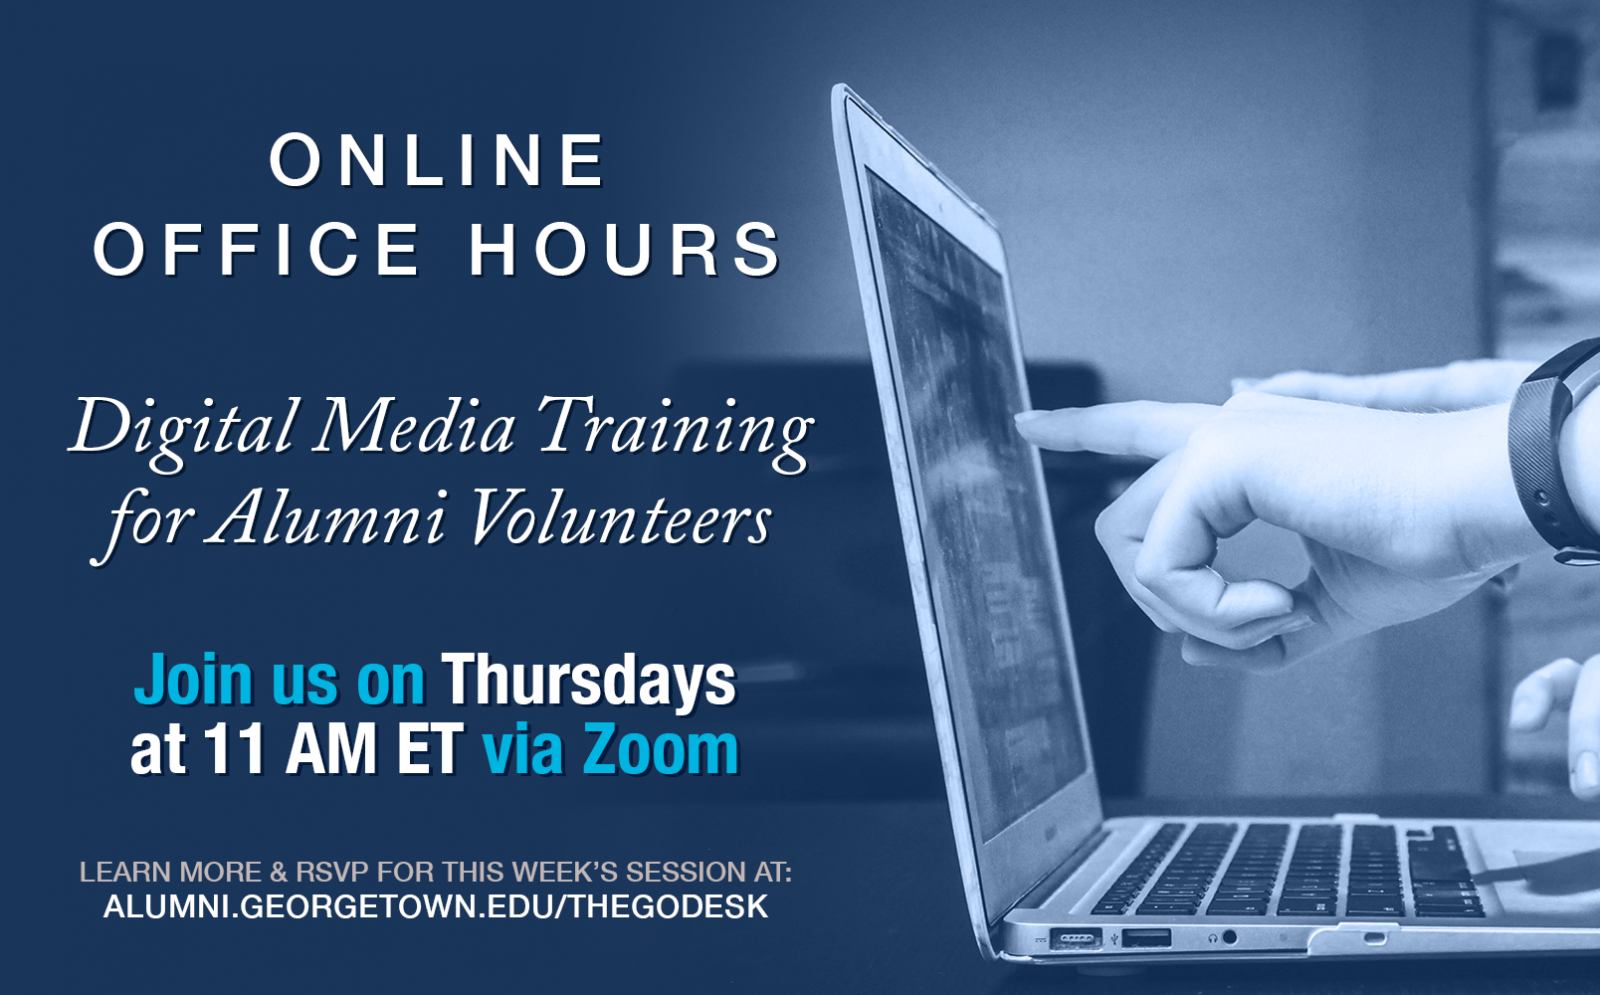 Online Office Hours: Digital Media Training for Alumni Aolutneers: Join us on Thursdays at 11 a.m. ET via Zoom